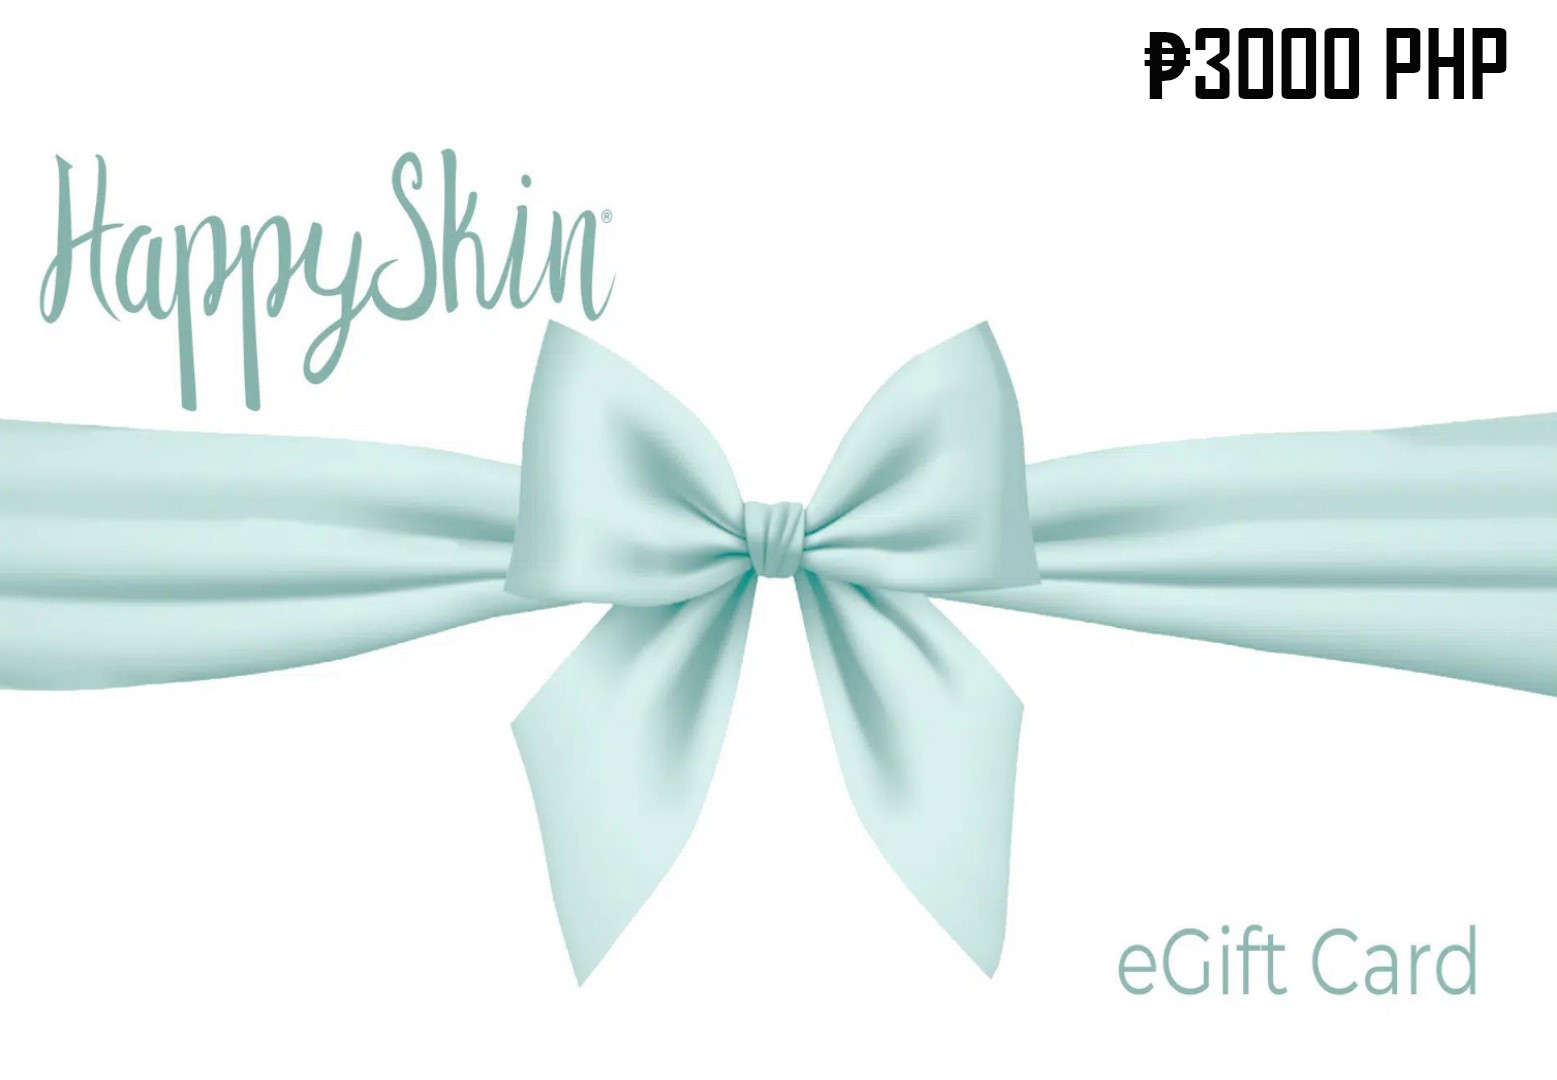 Happy Skin ₱3000 PH Gift Card (62.52$)